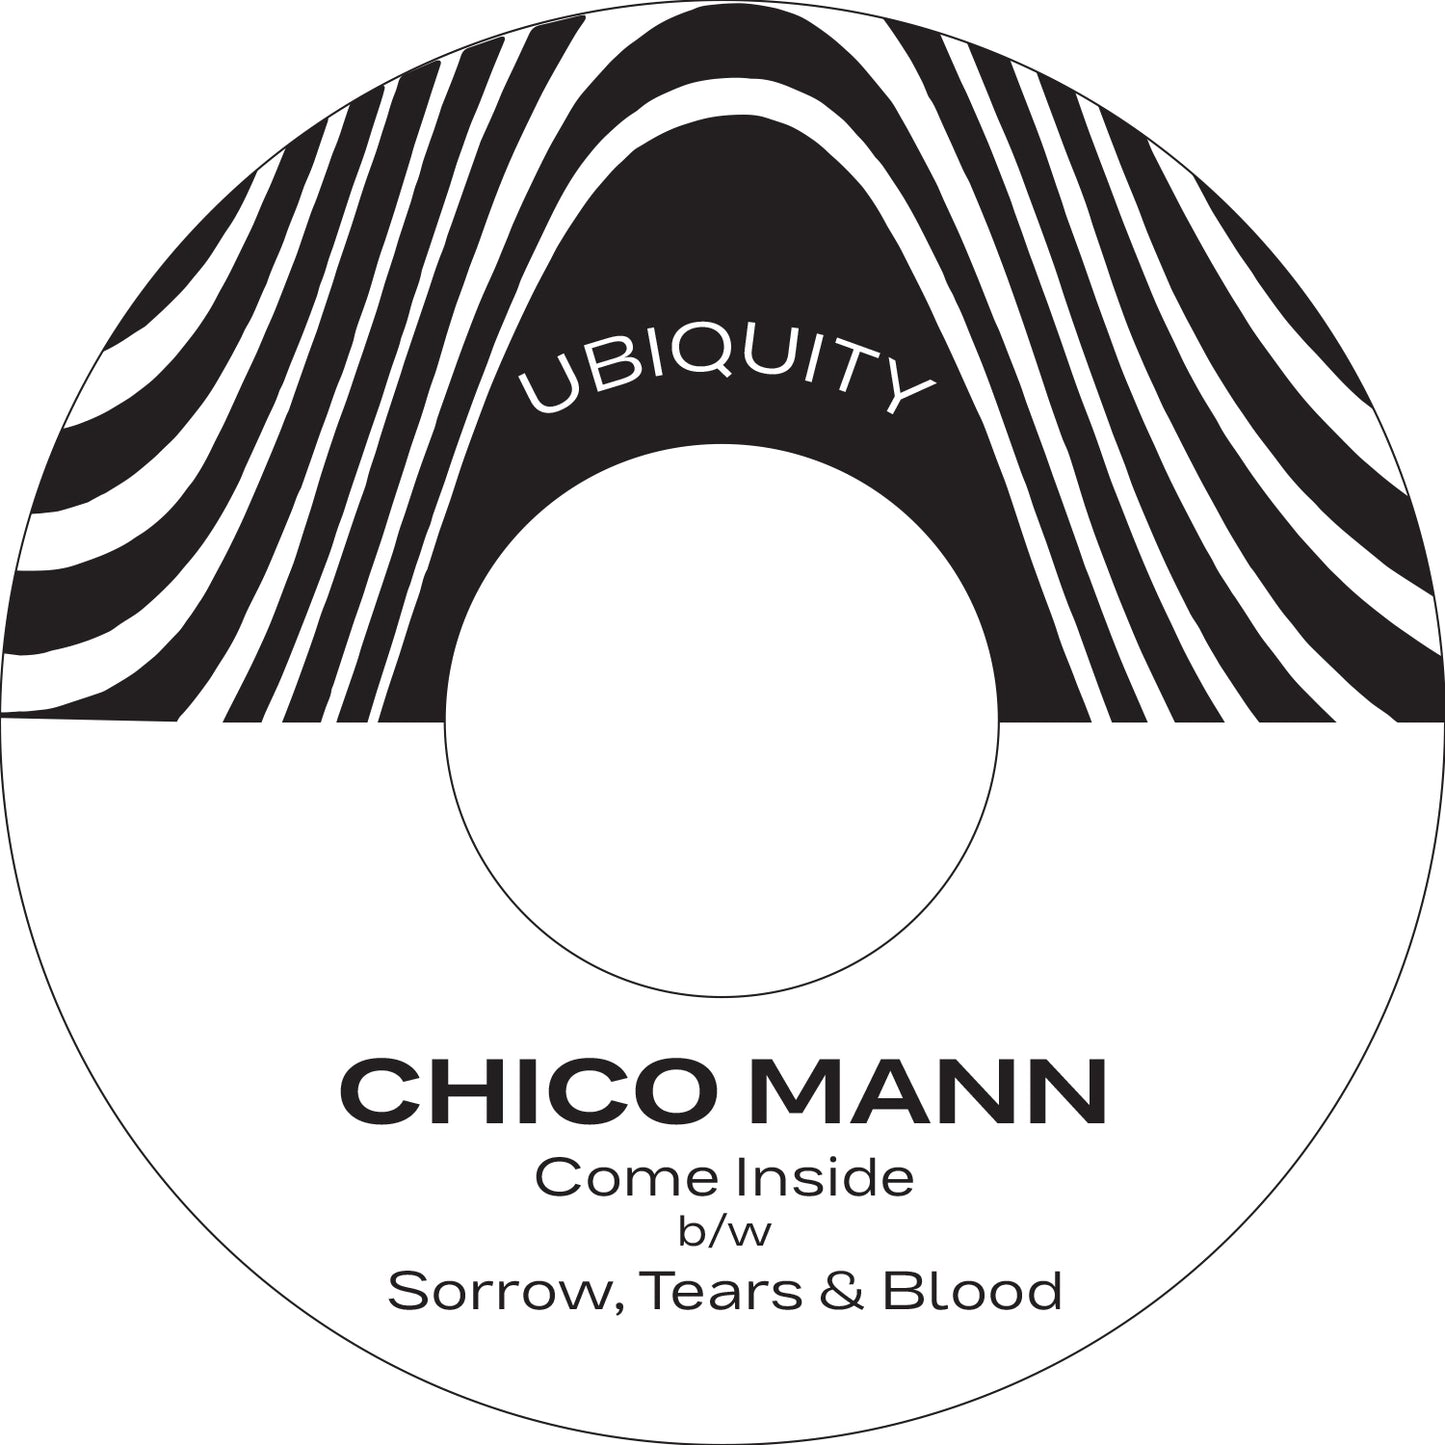 Chico Mann "Come Inside b/w Sorrow Tears & Blood" 7 Inch